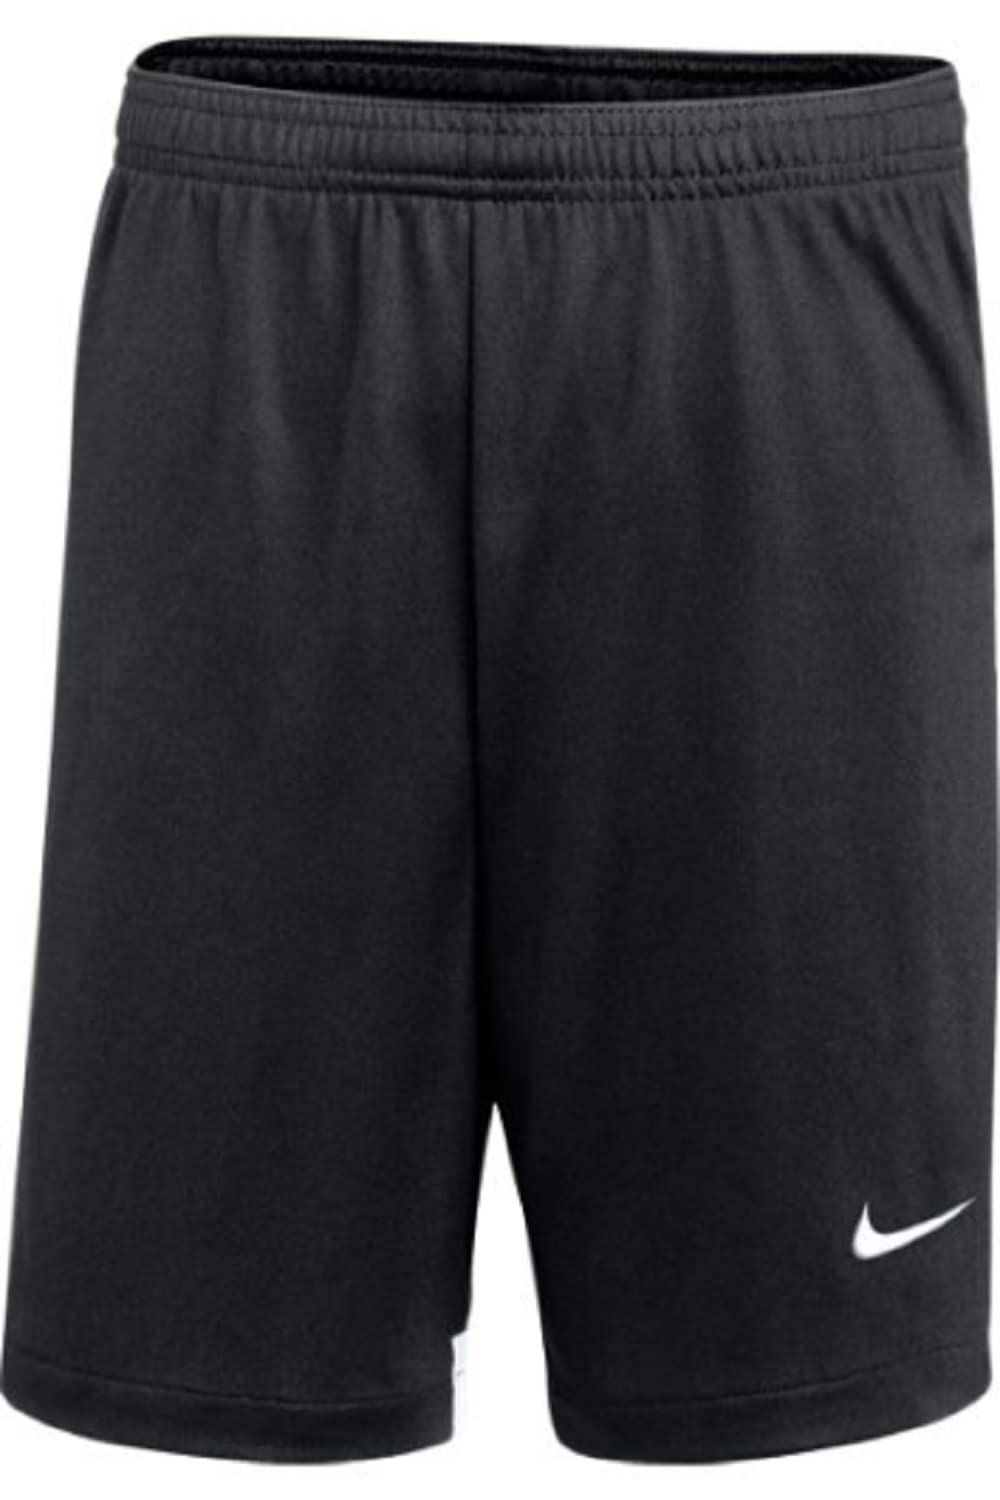 Nike Youth DRI-FIT Classic II Shorts